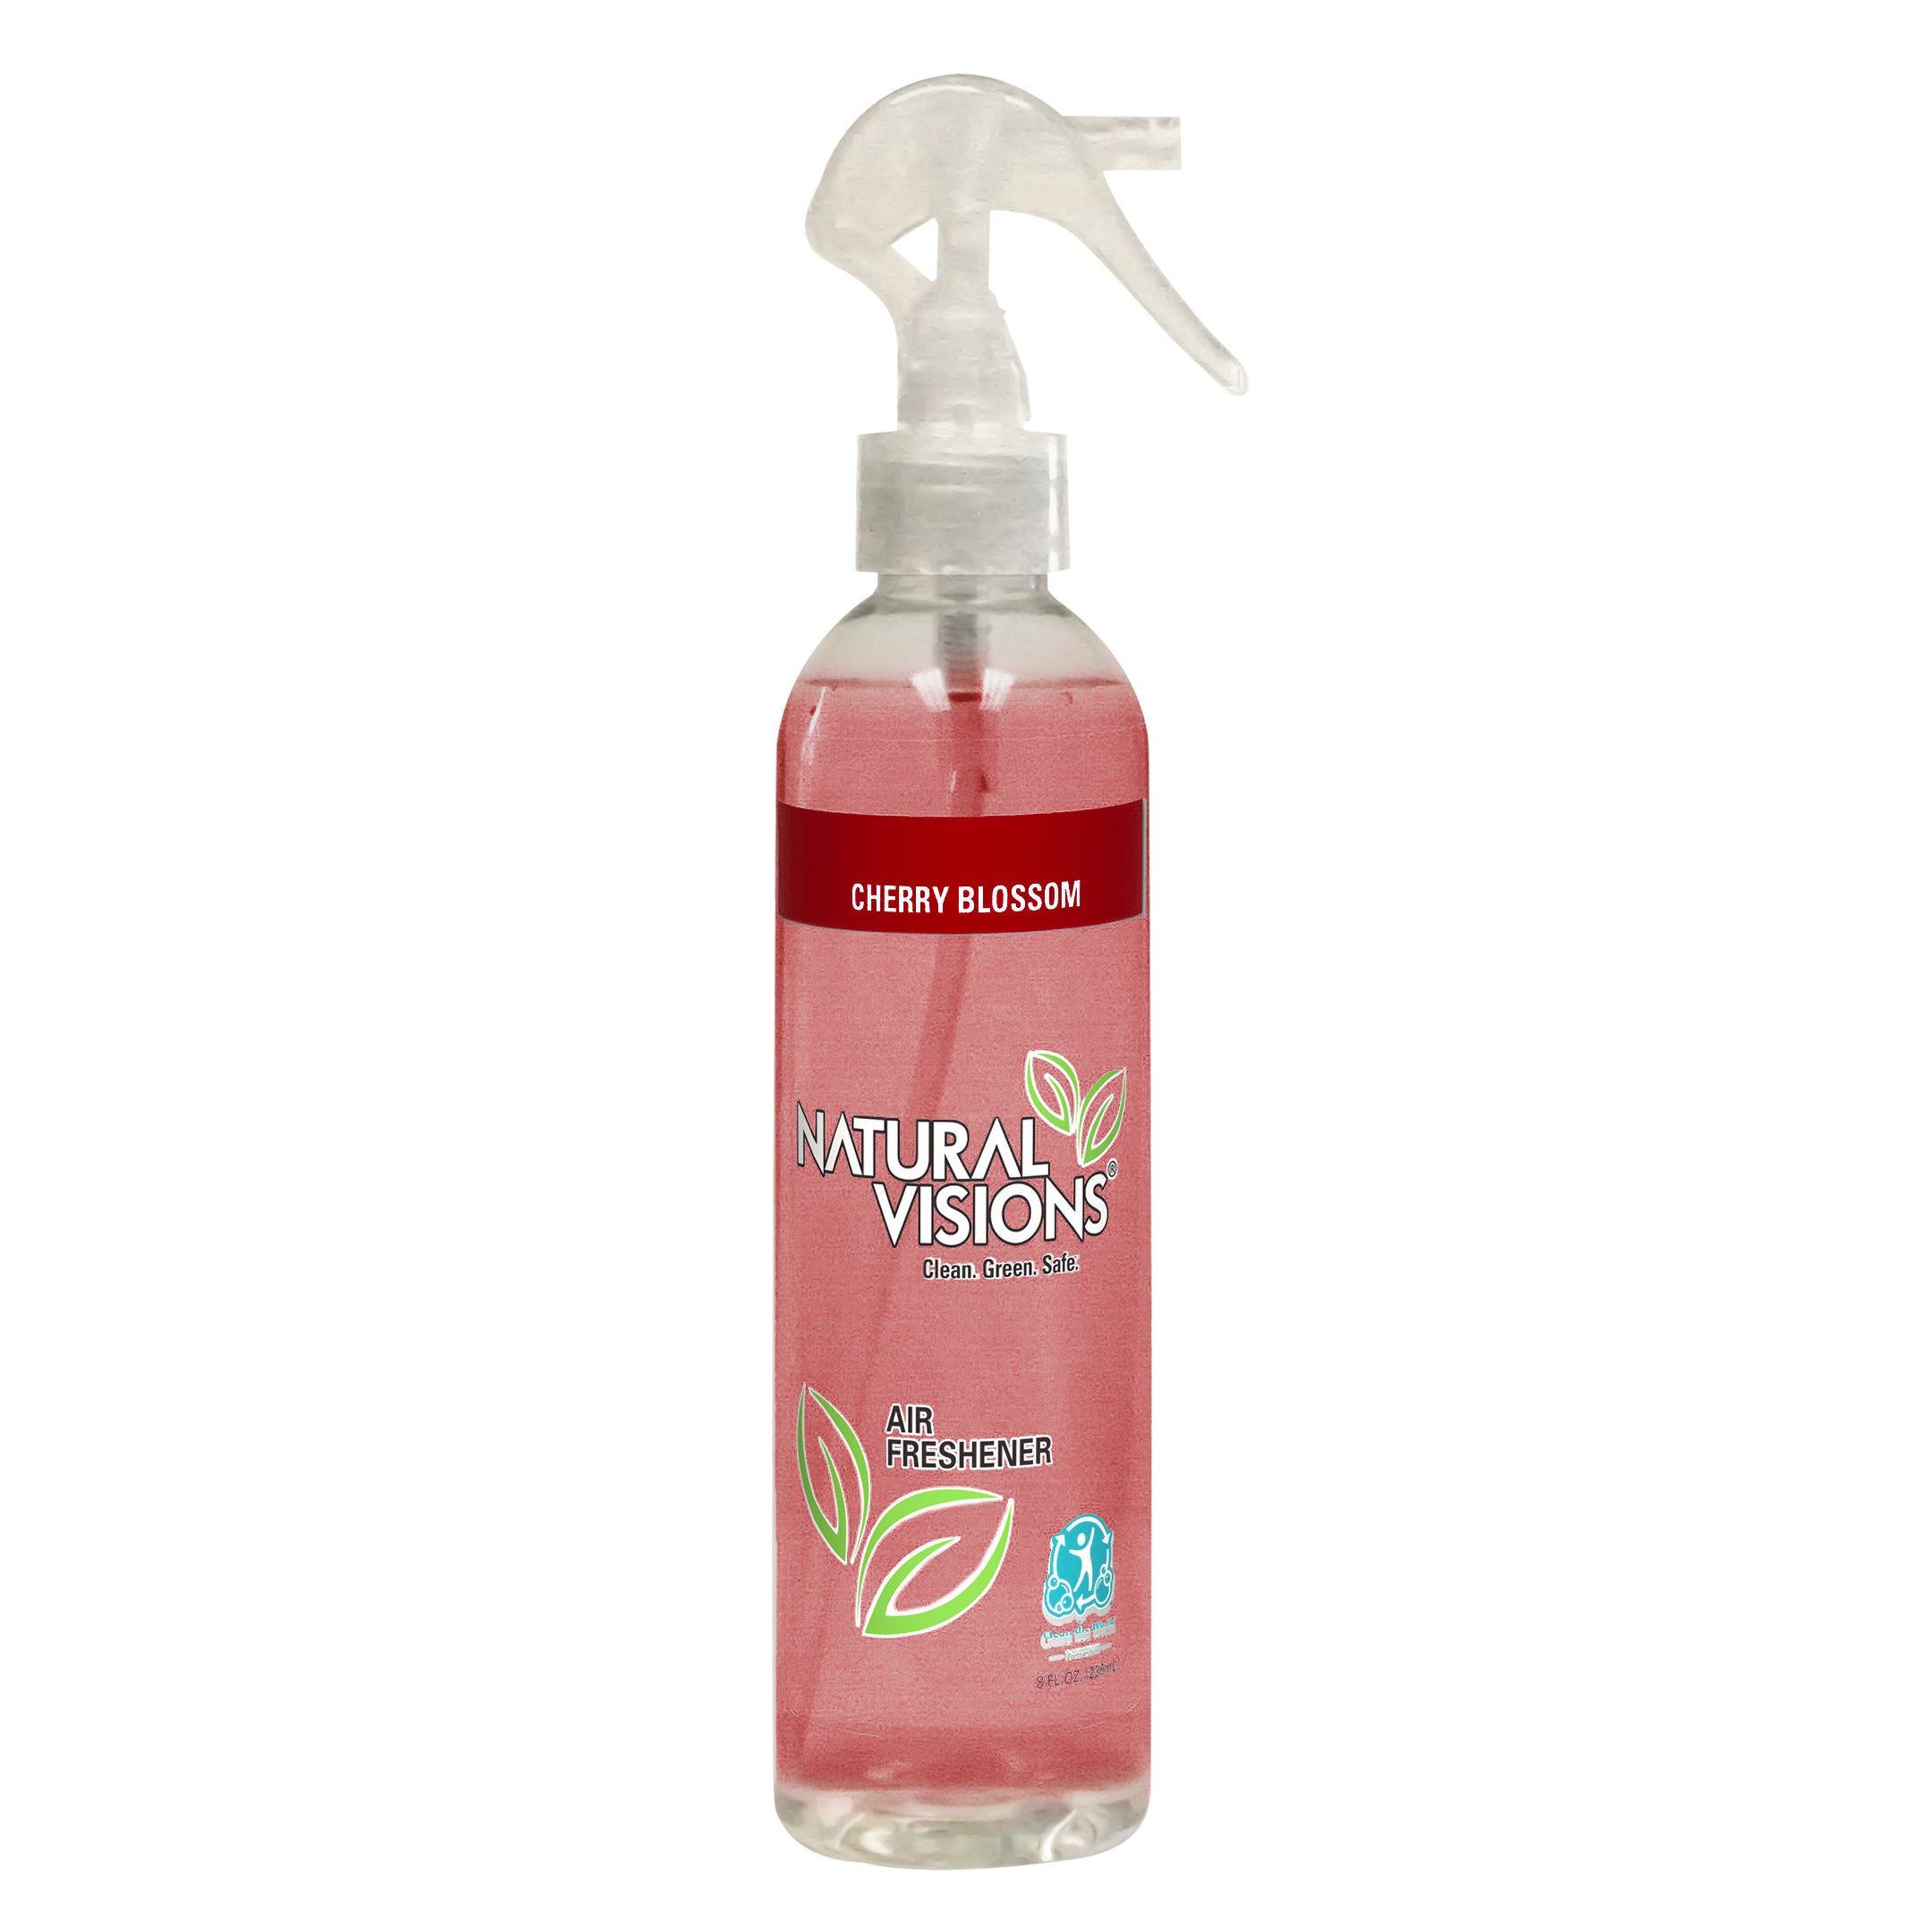 Natural Visions Cherry Blossom Air Freshener - 8oz/6pk